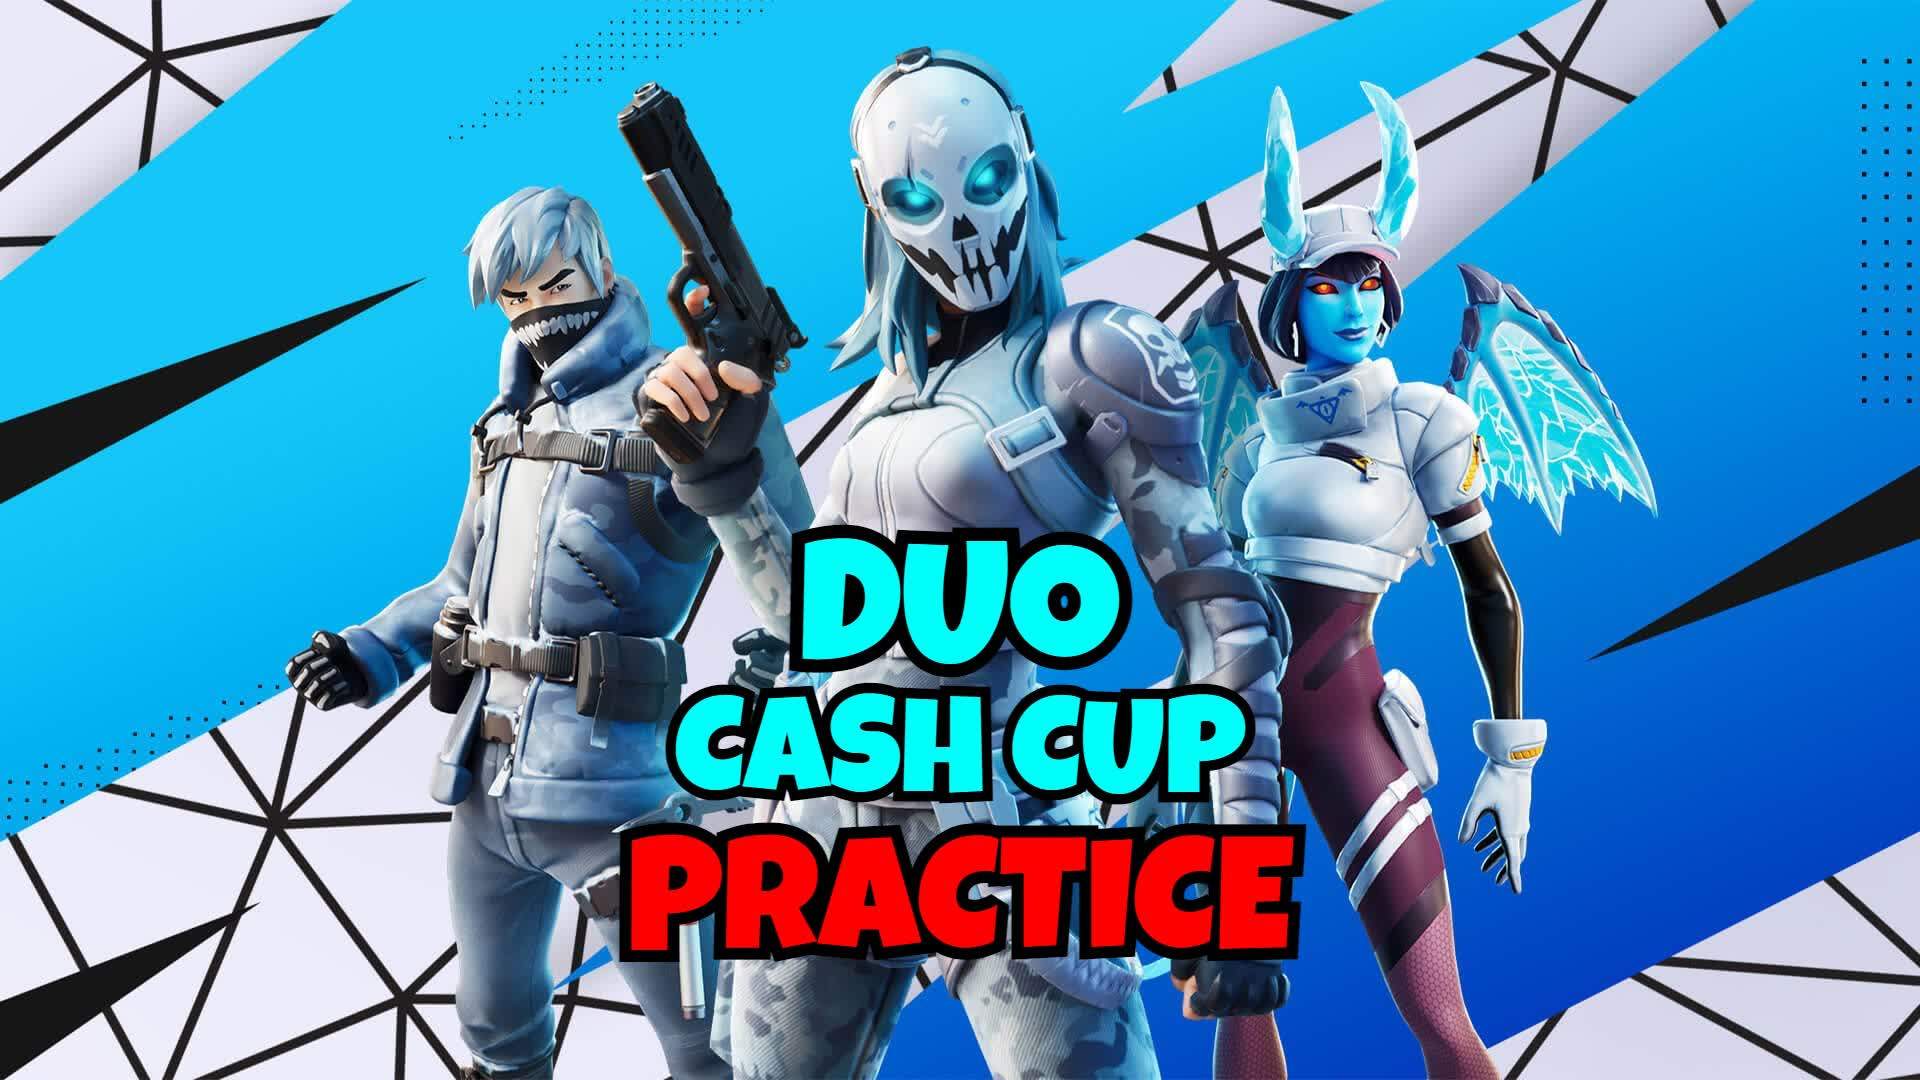 CASH CUP PRACTICE (DUO) 👑